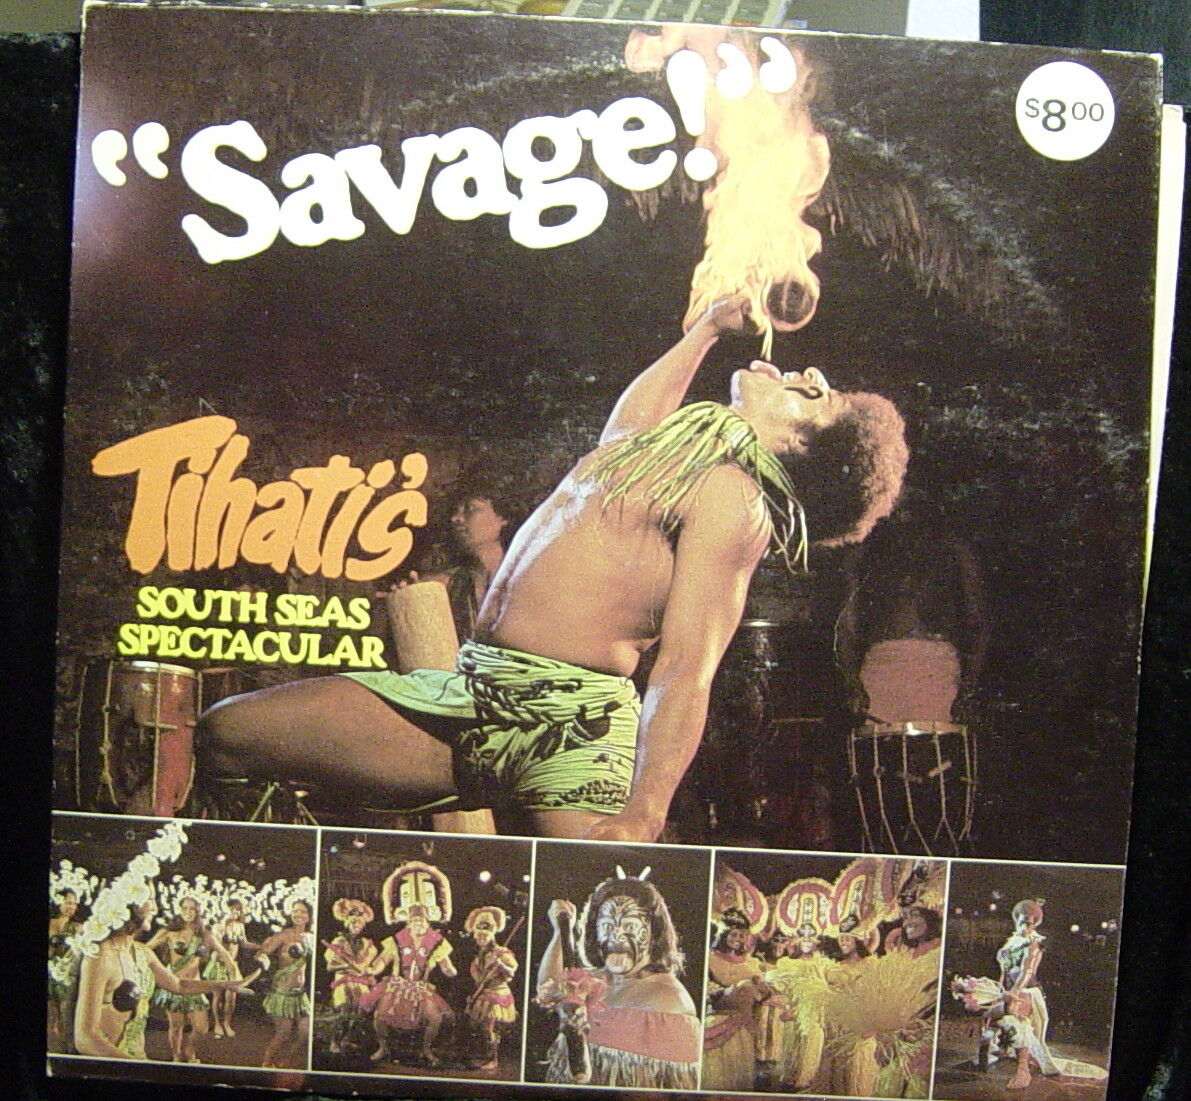 Tihatis South Sea Spectacular-Savage -HULA HIPS dance instruction-ALOHA AIRLINES